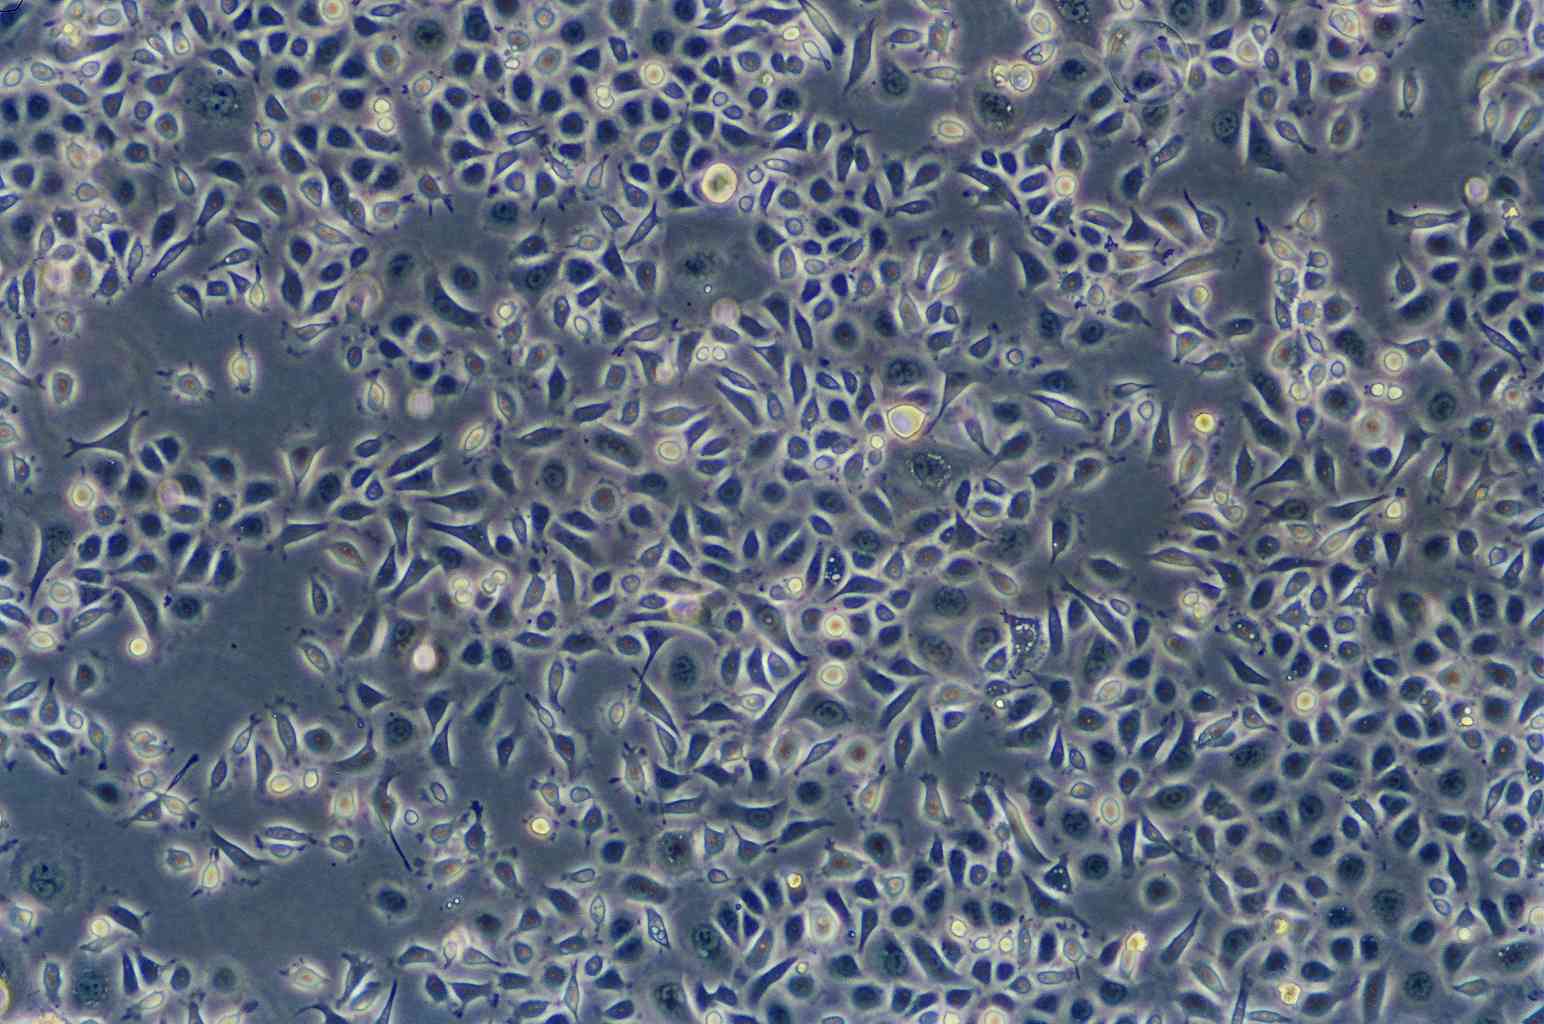 HEK293-FT epithelioid cells表达SV40T抗原人胚肾上皮细胞系,HEK293-FT epithelioid cells